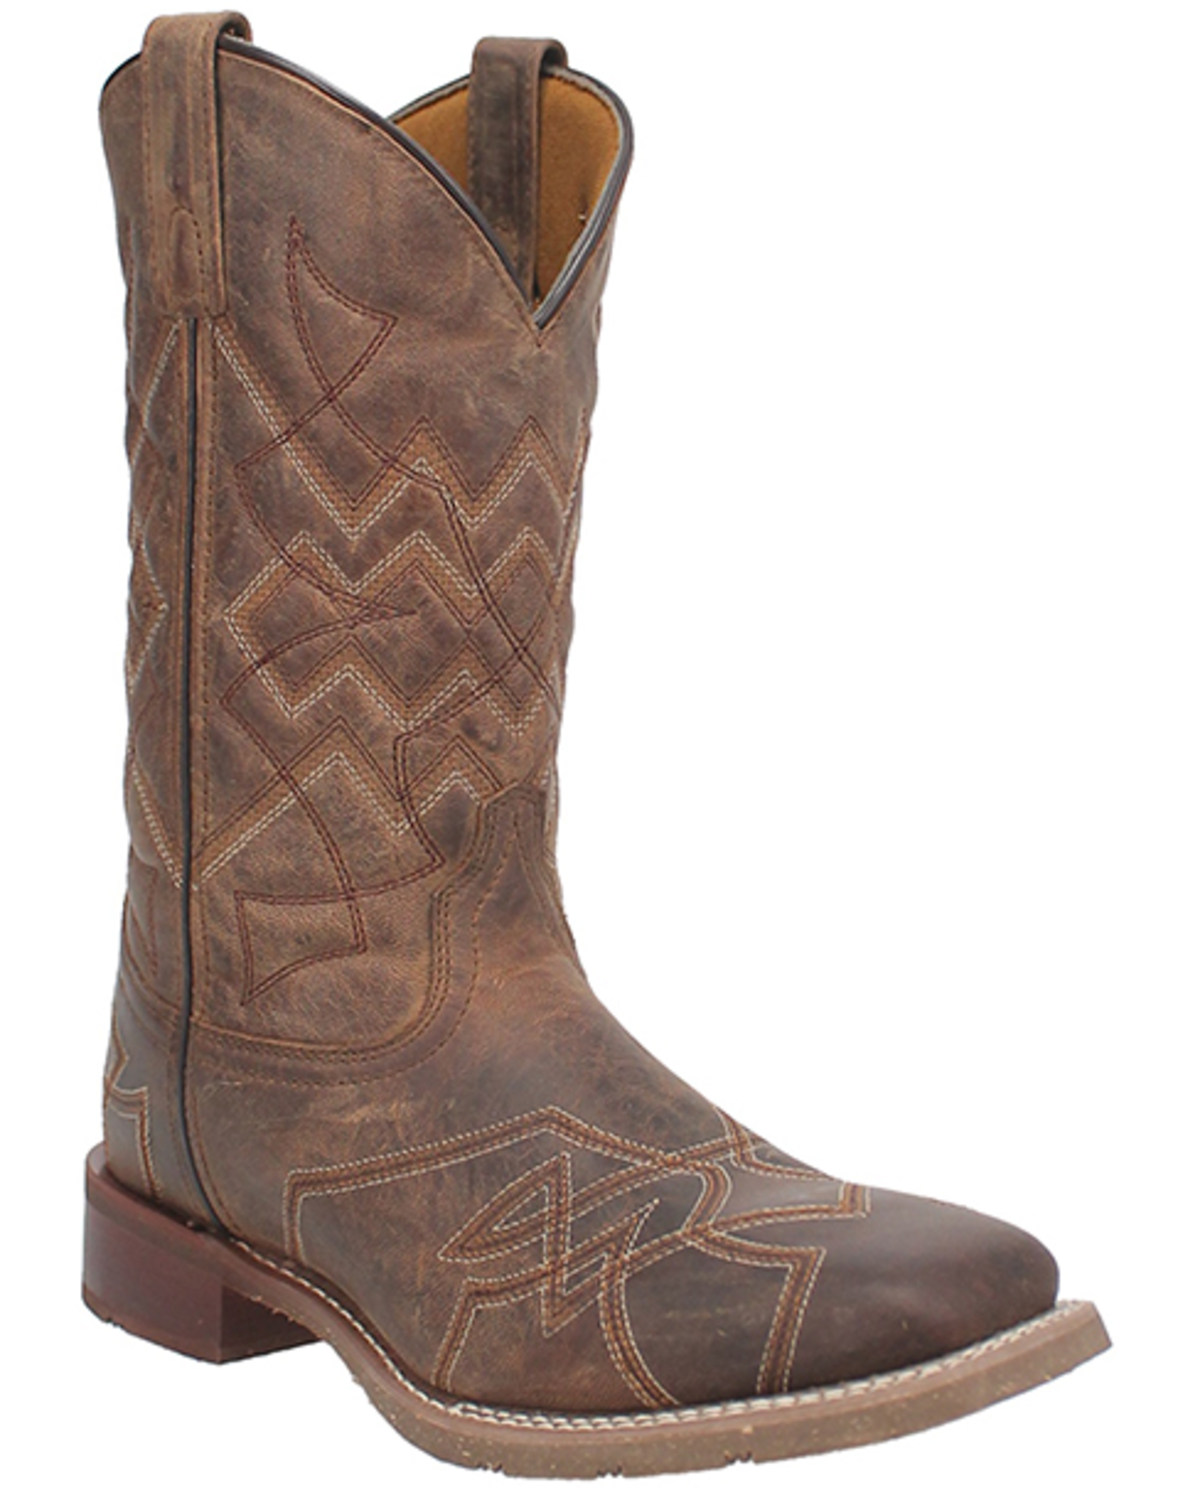 Laredo Men's Chauncy Western Boots - Broad Square Toe